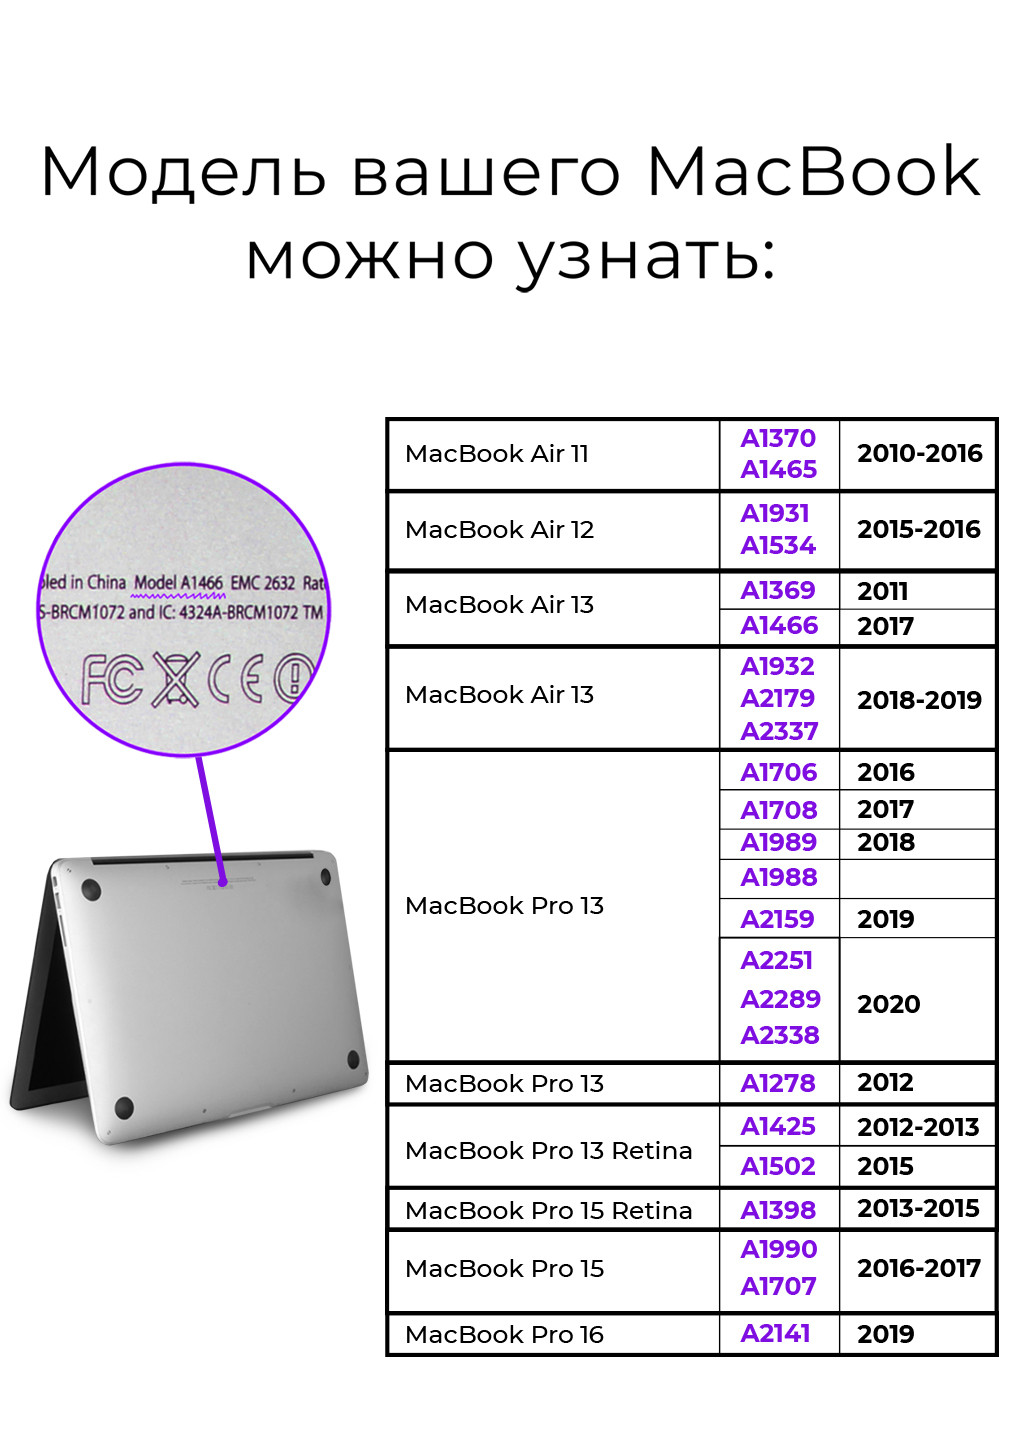 Чохол пластиковий для Apple MacBook Pro Retina 13 A1502 / А1425 Кіберпанк 2077 (Cyberpunk 2077) (6352-2433) MobiPrint (218859016)